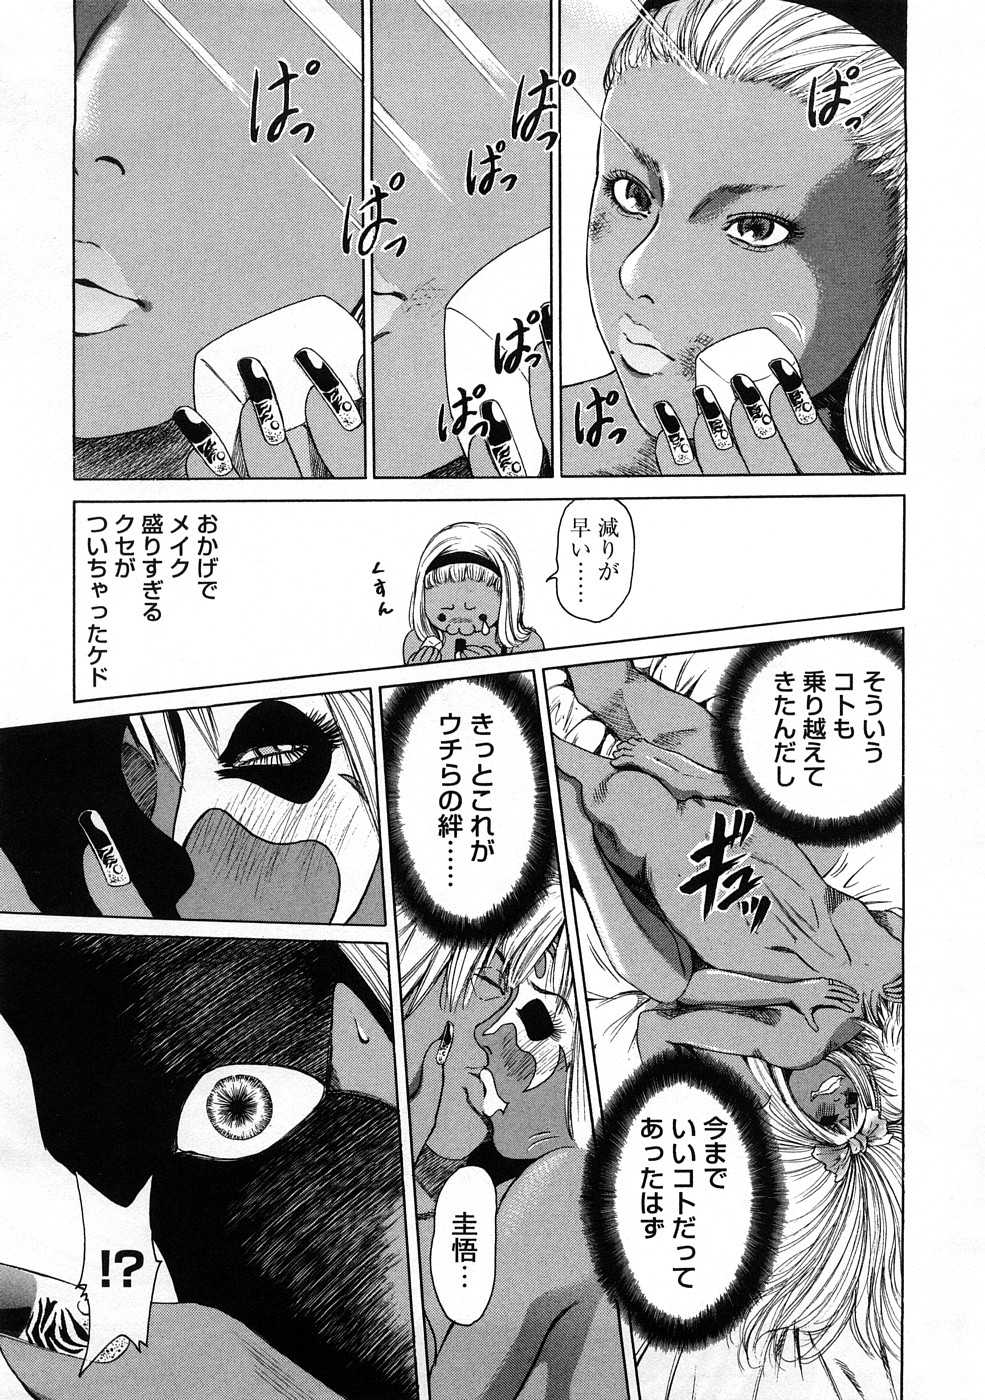 [TAKUMI] 黒ギャル@実用化計画 (TAKUMI - Black Gals @ Sexual Slave Discipline) 